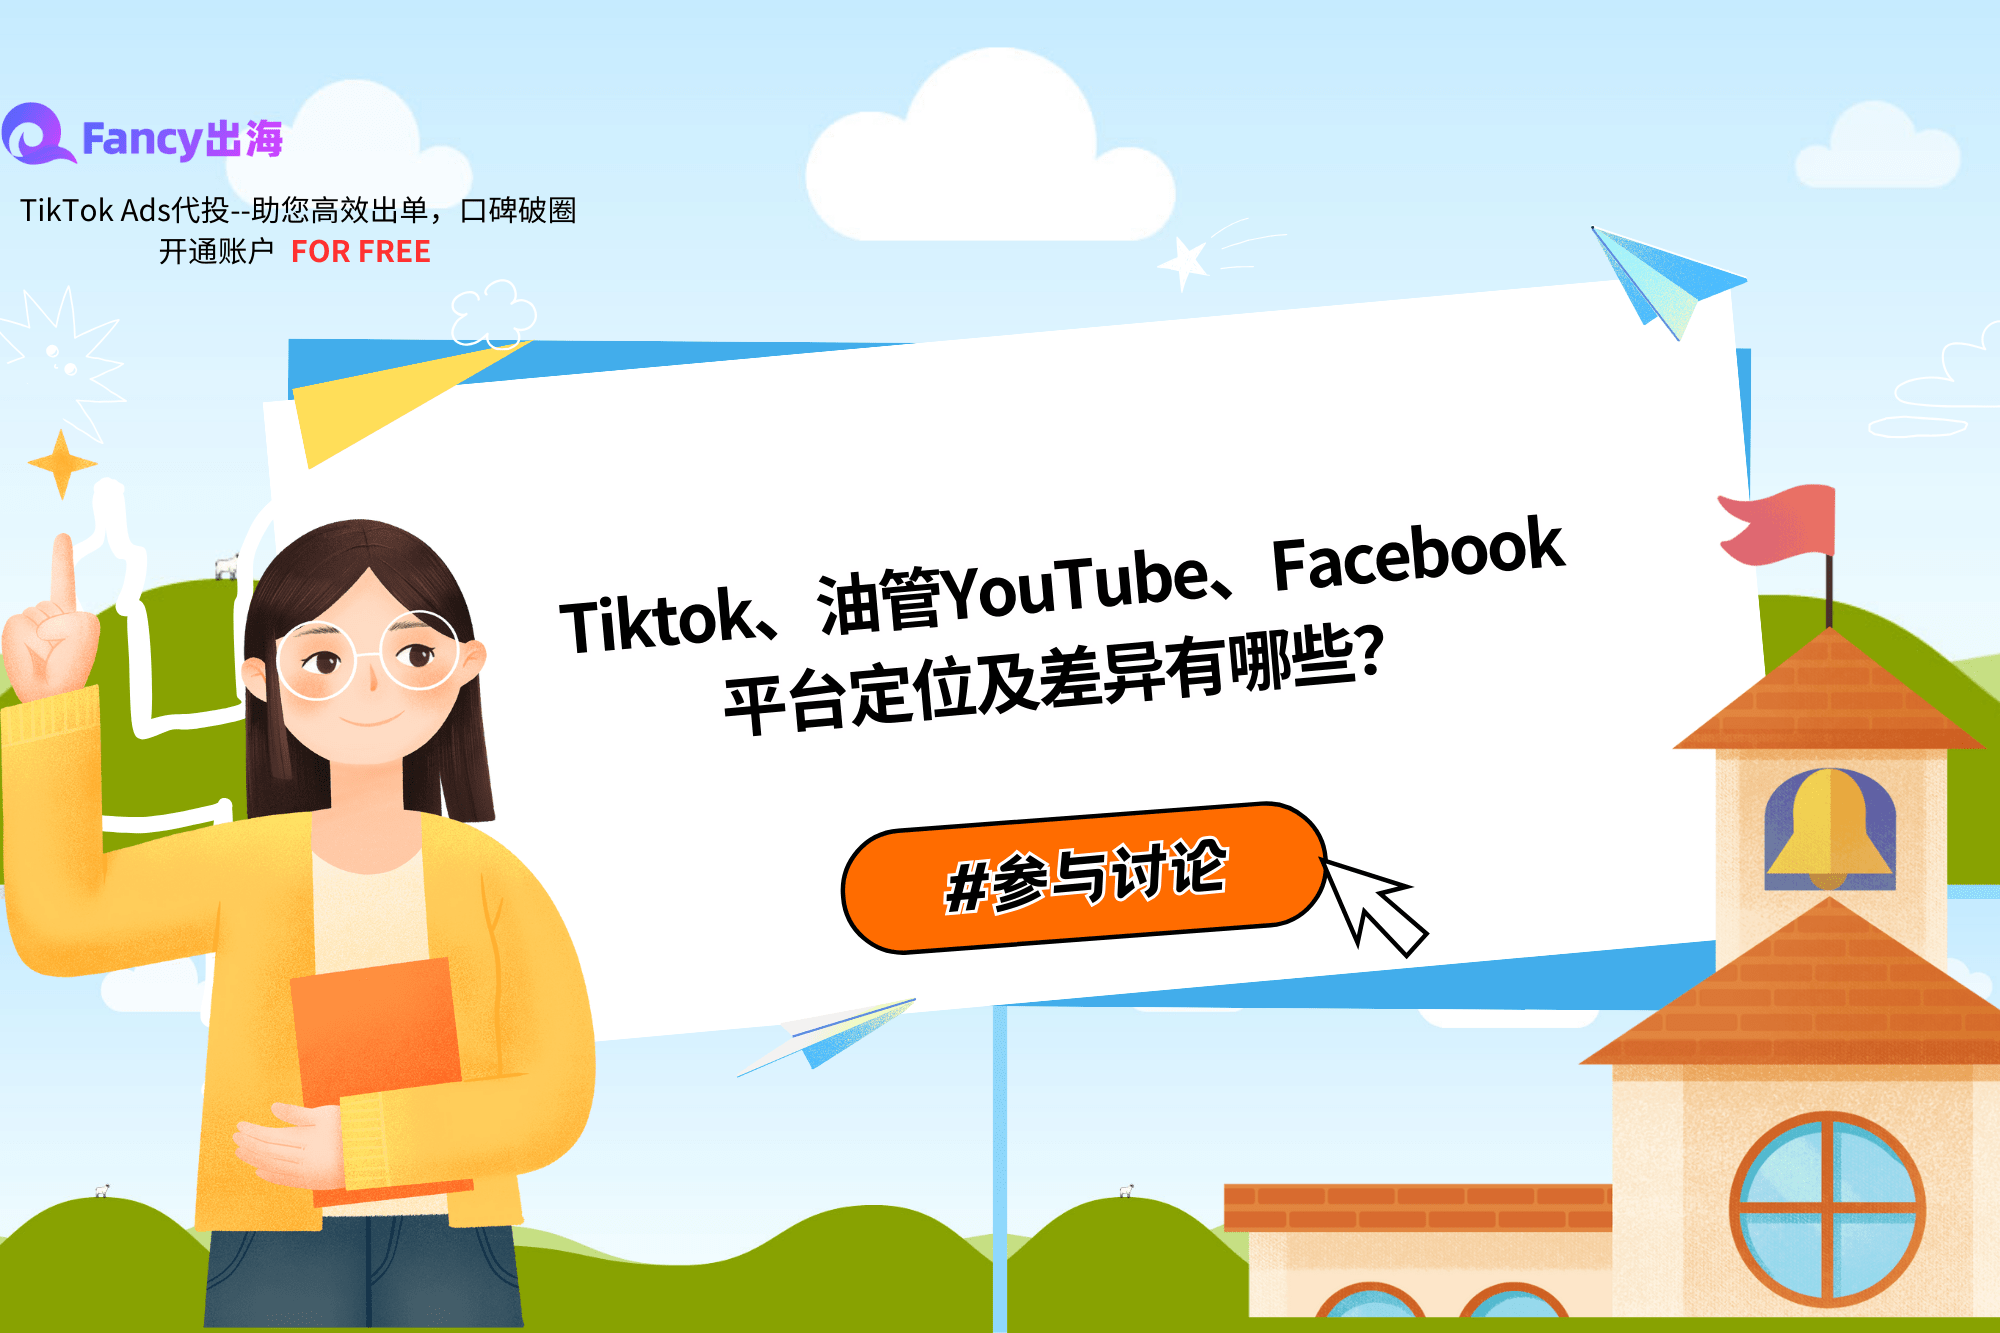 Tiktok、油管YouTube、Facebook平台定位及差异有哪些？ 